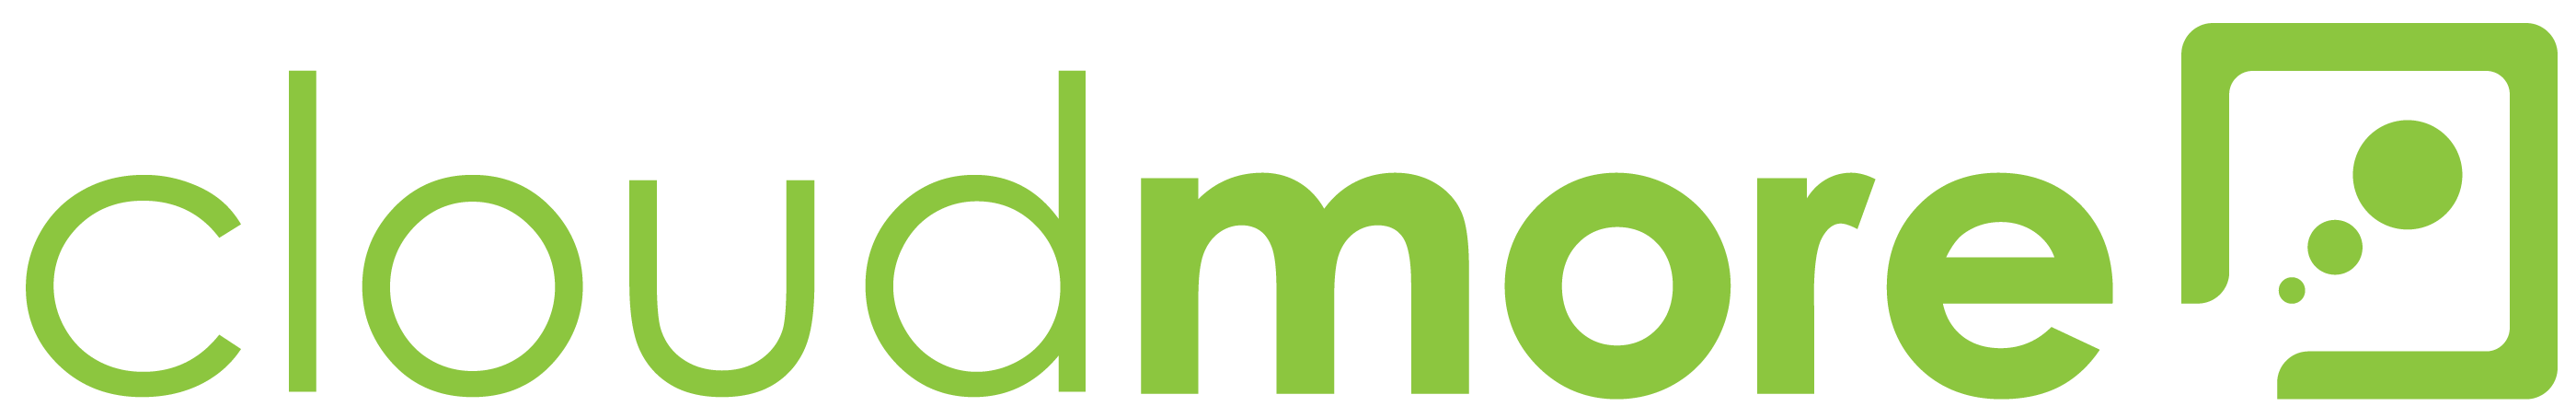 Cloudmore-Logo-Green-300dpi